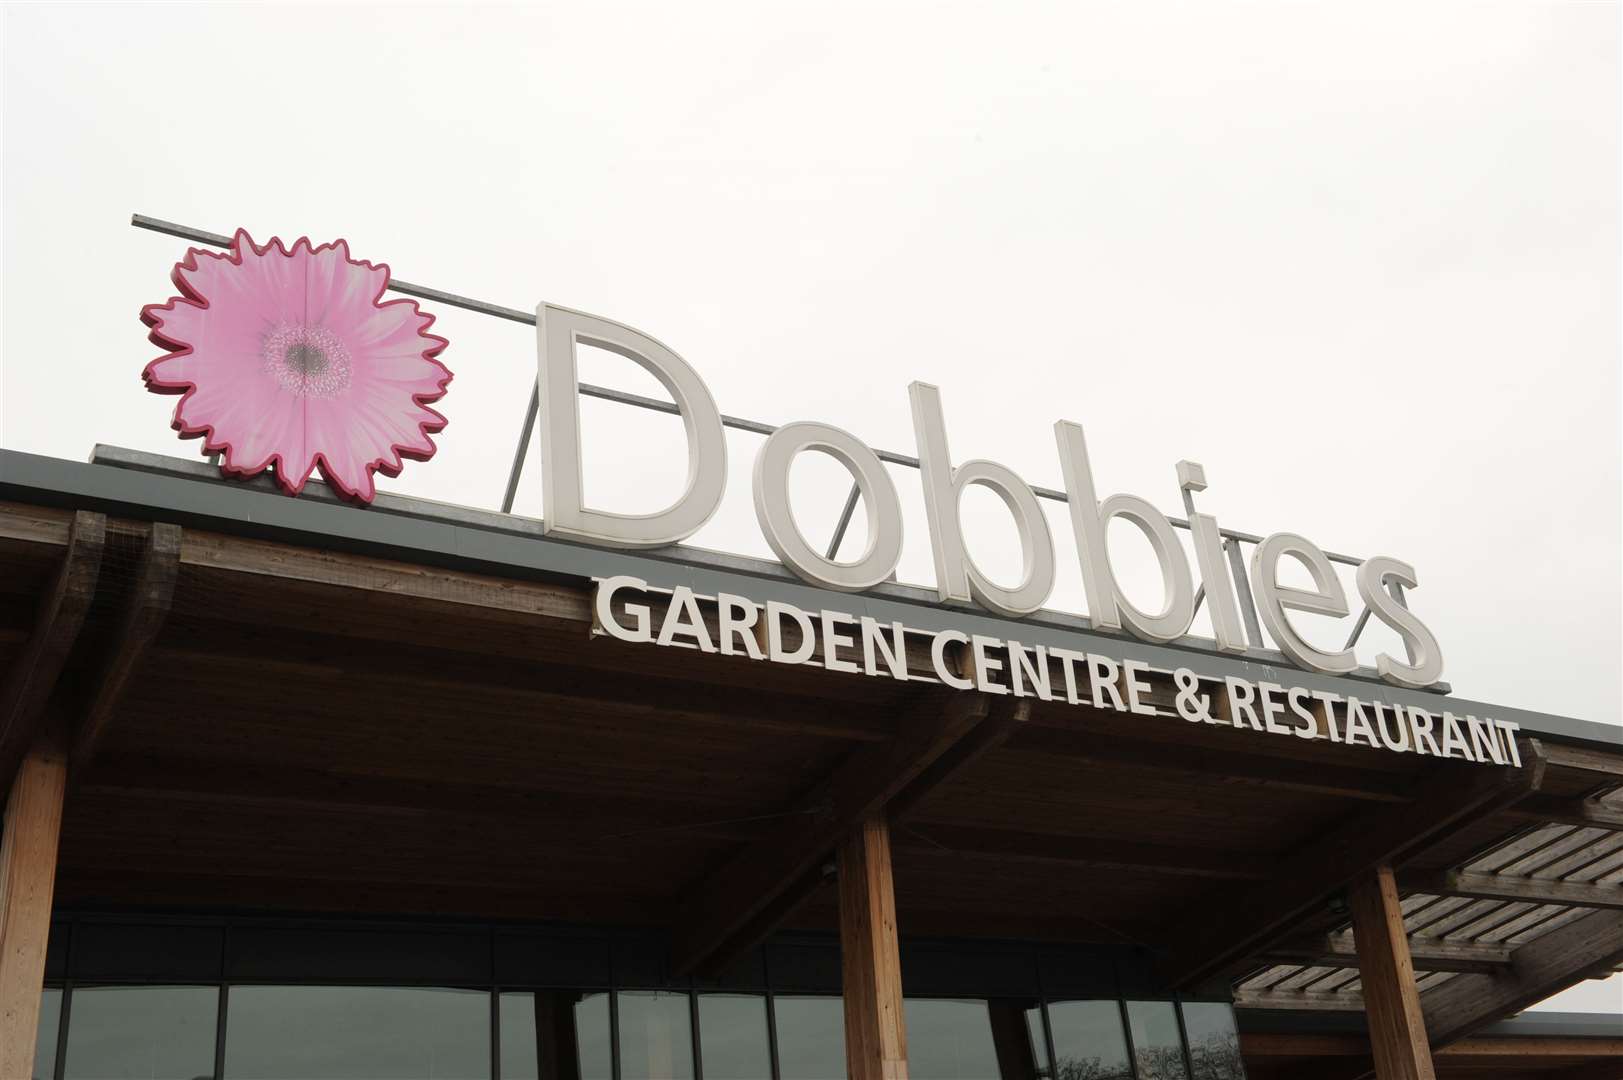 Dobbies Garden Centre, Courteney Road, Gillingham